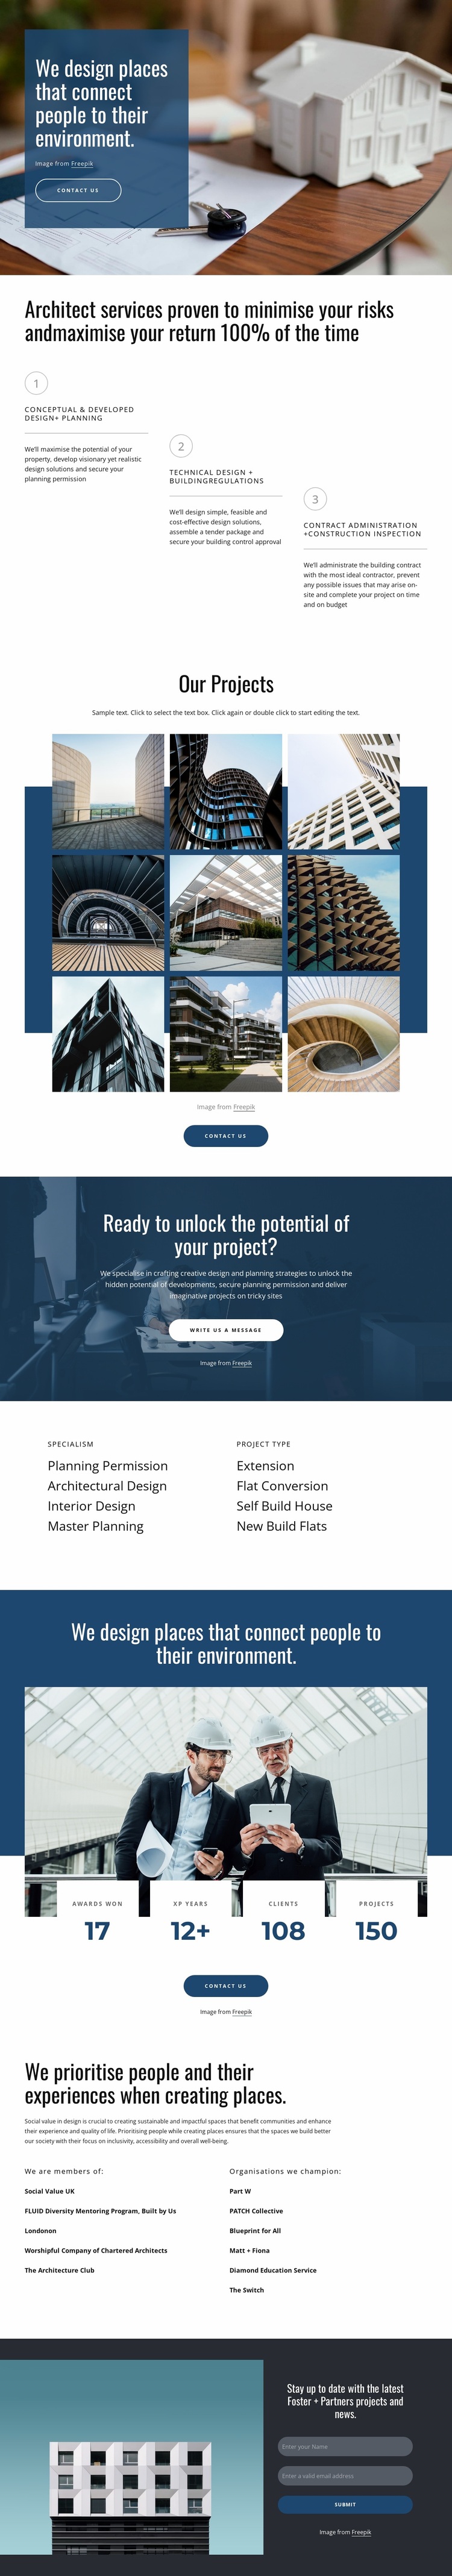 We design amazing projects Website Design